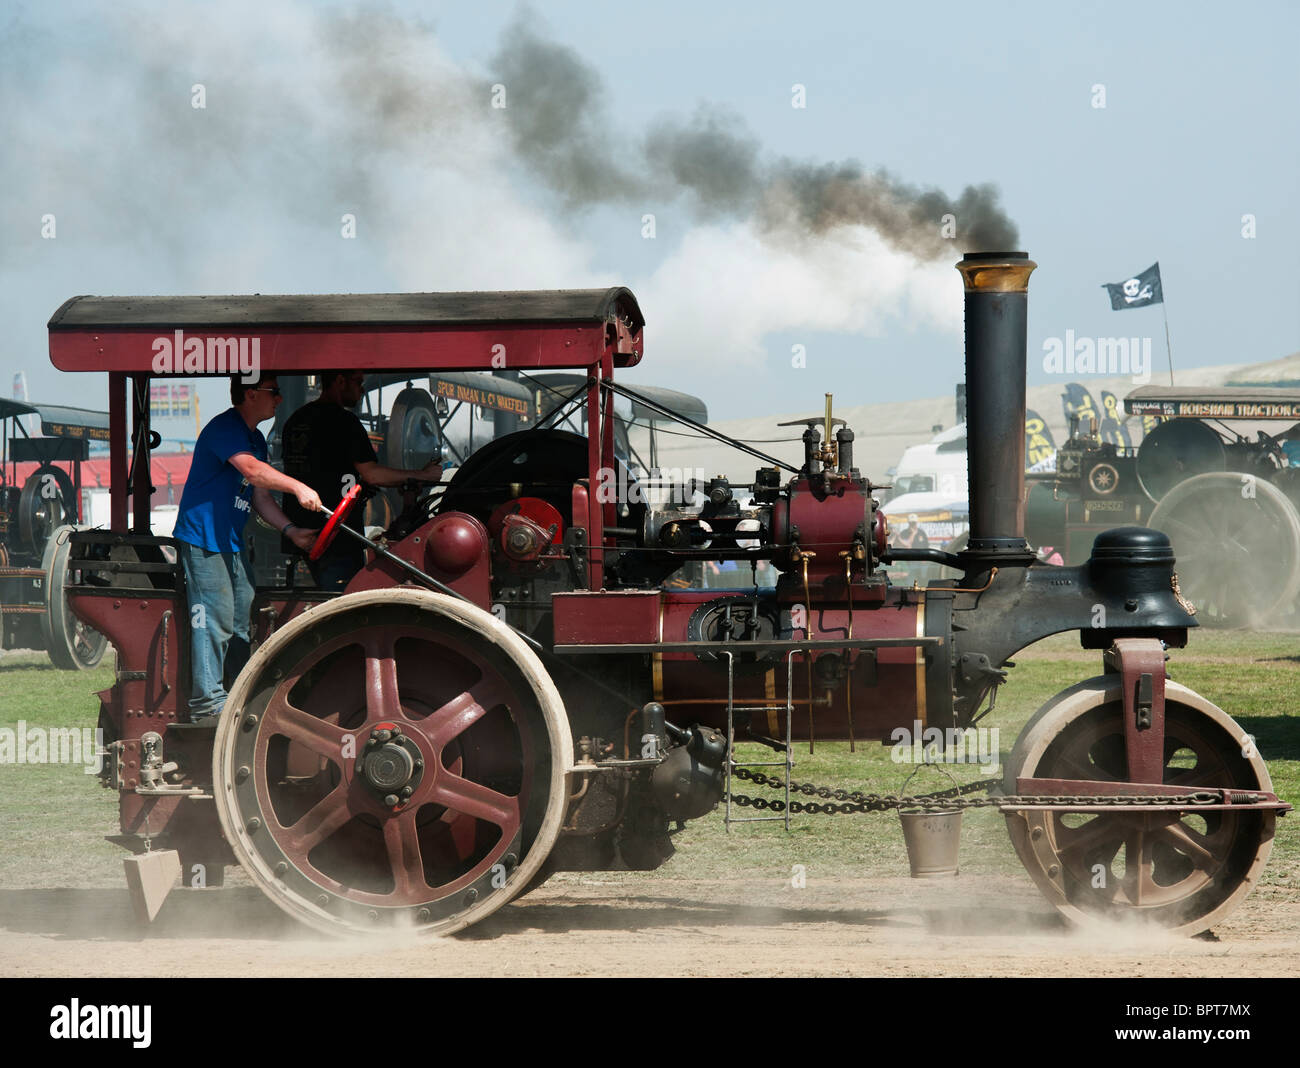 Vintage Steam Roller engine at Great Dorset steam fair in England Stock Photo